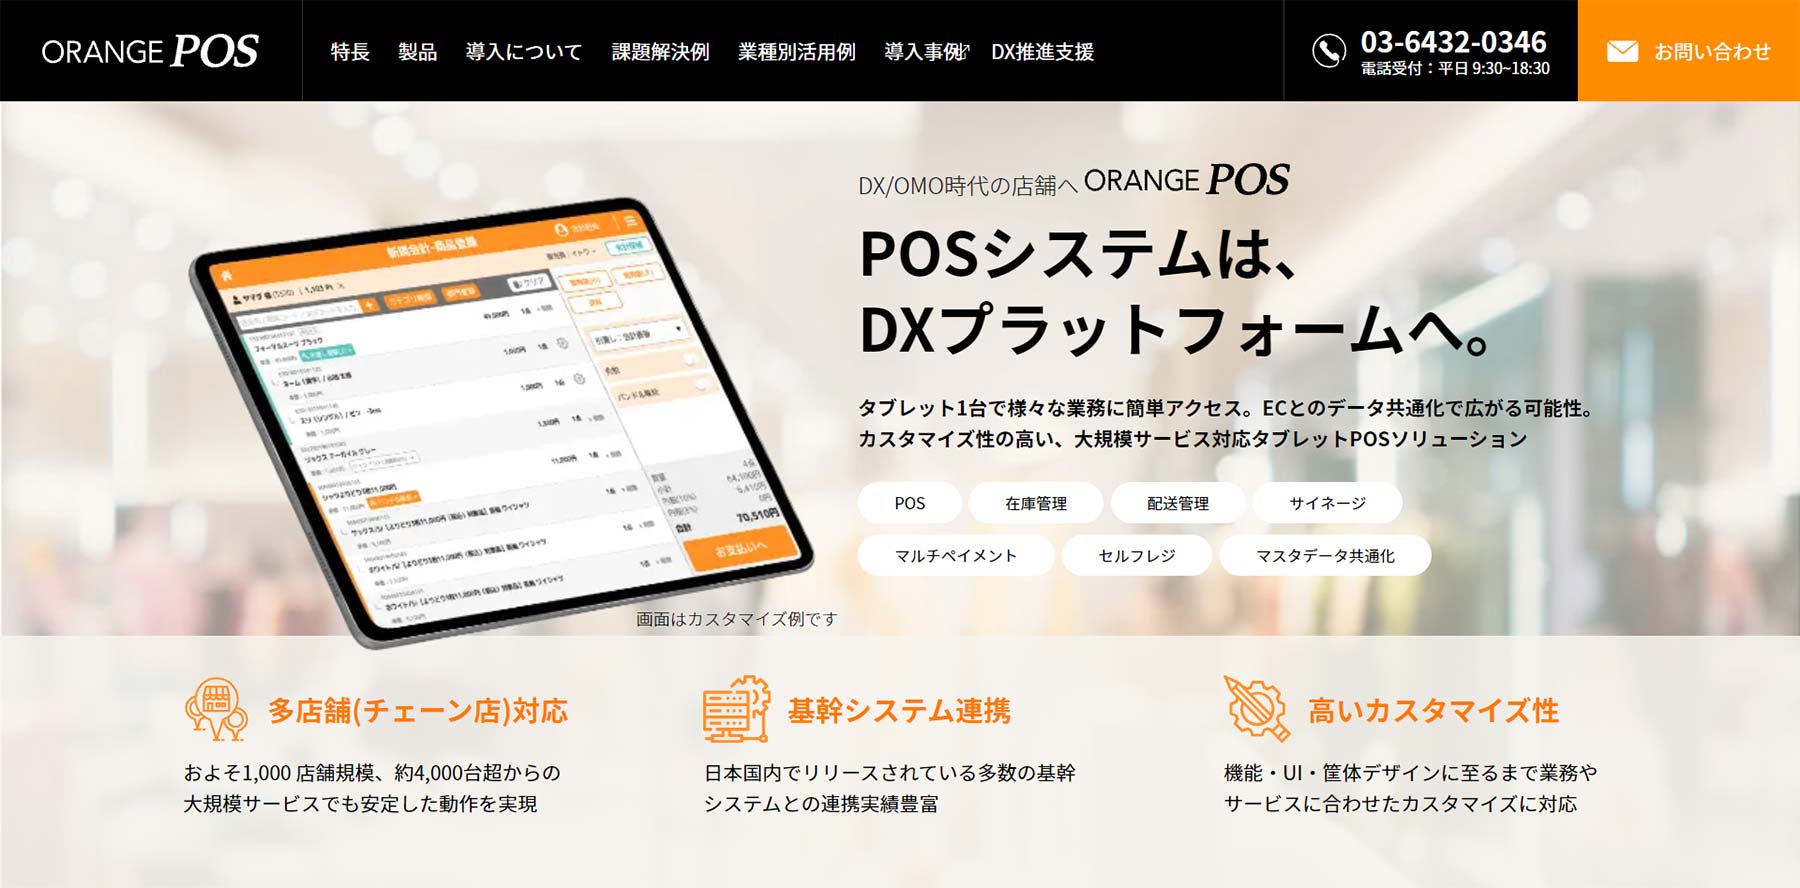 Orange POS公式Webサイト